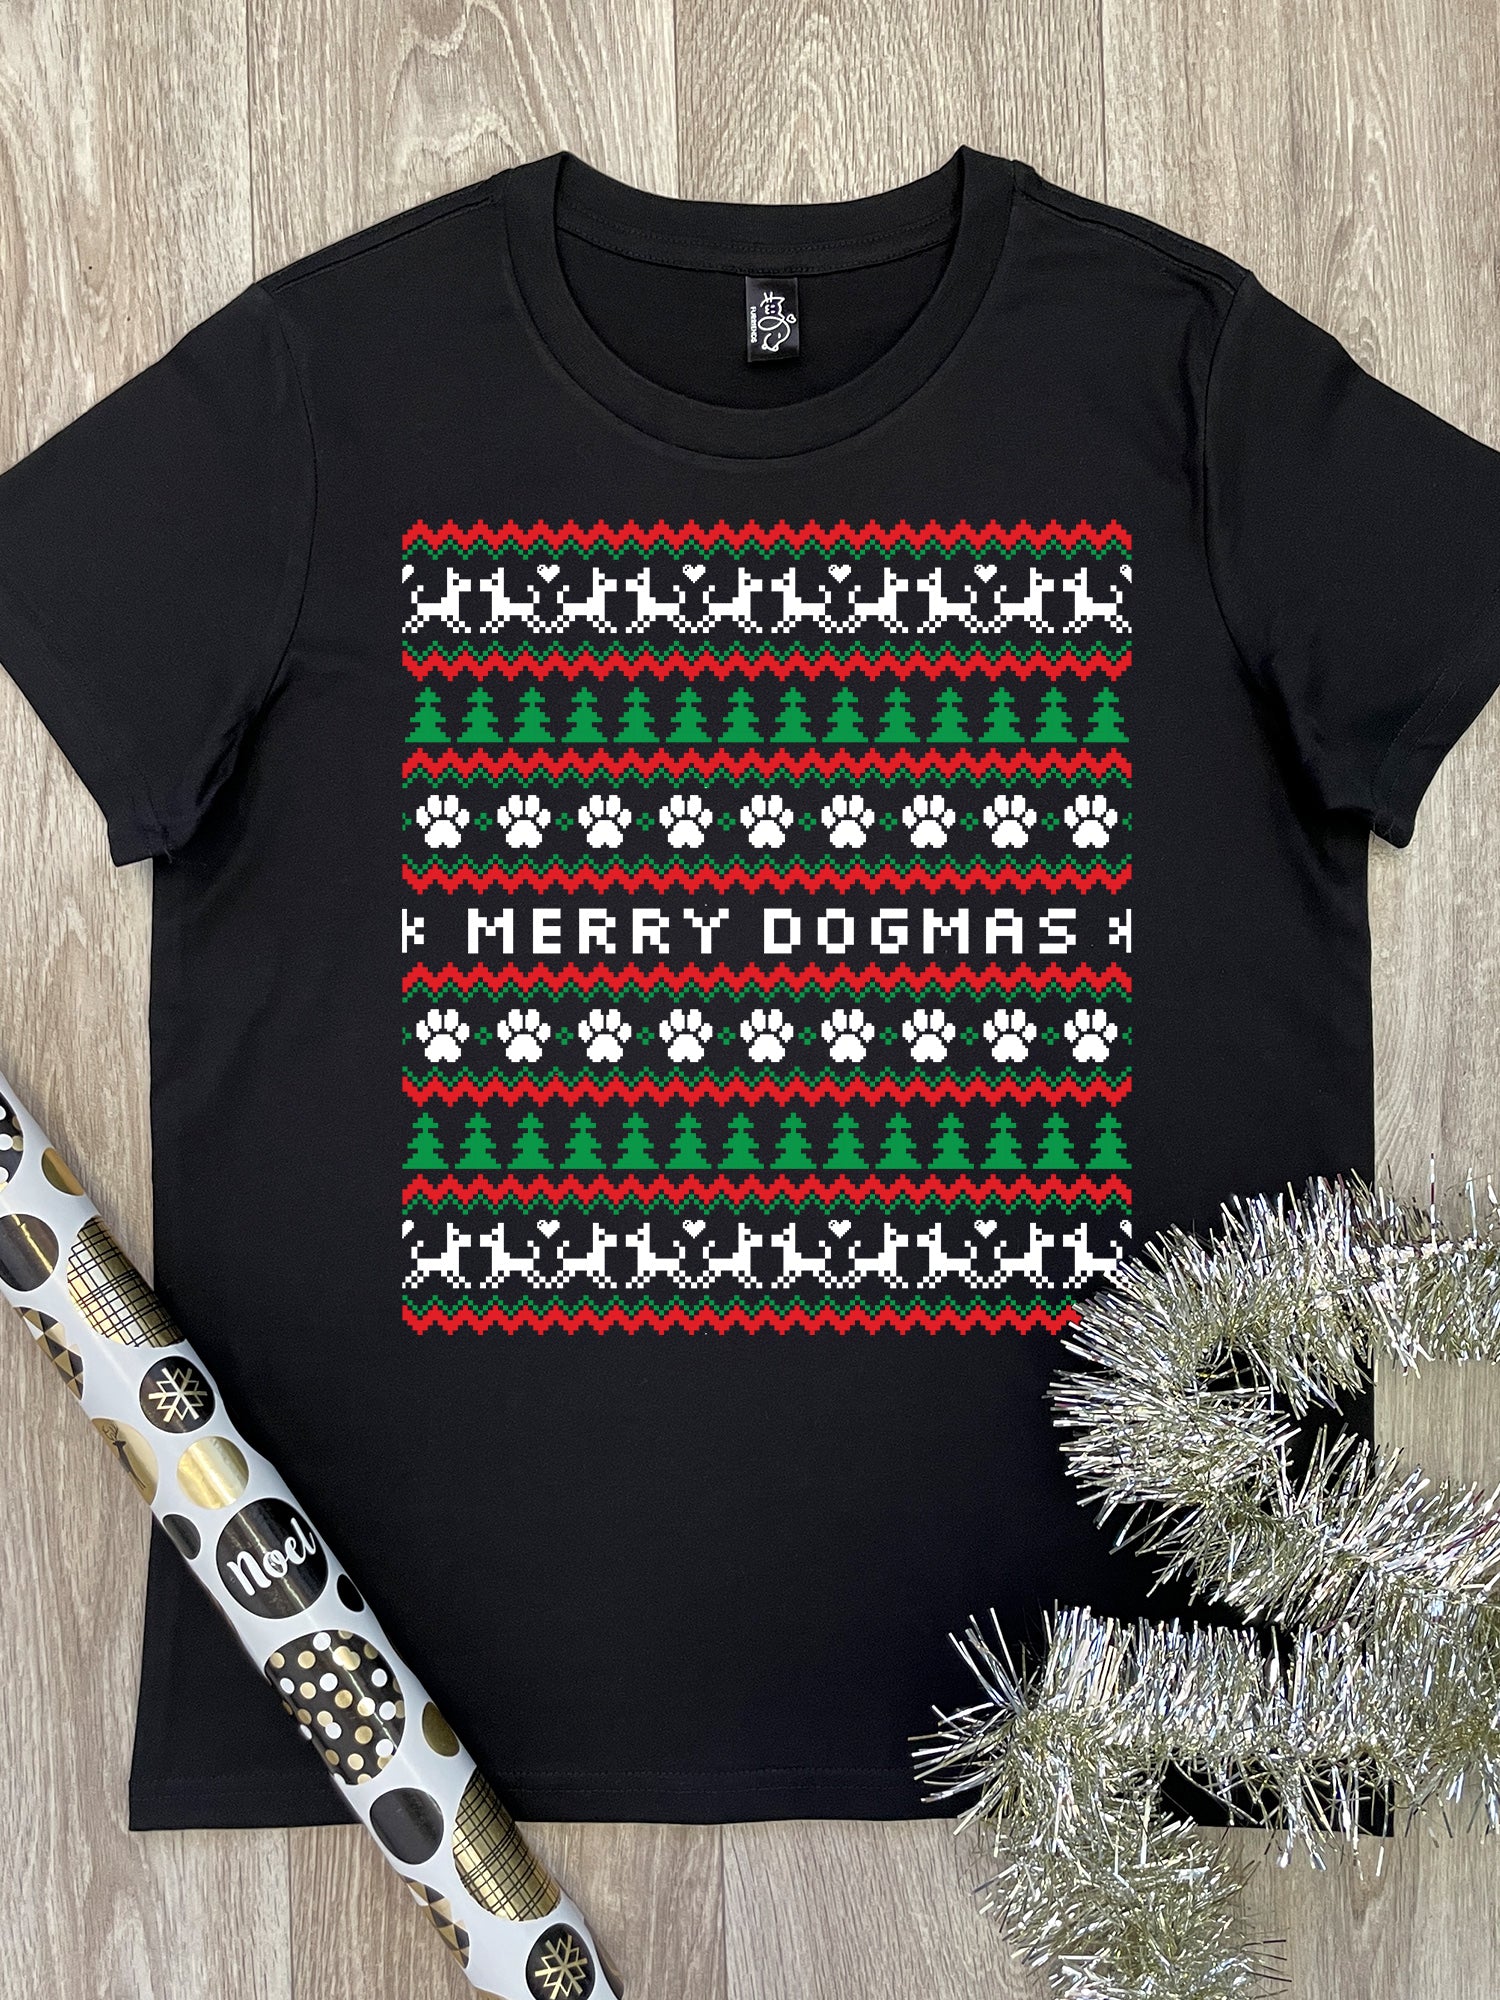 Merry Dogmas